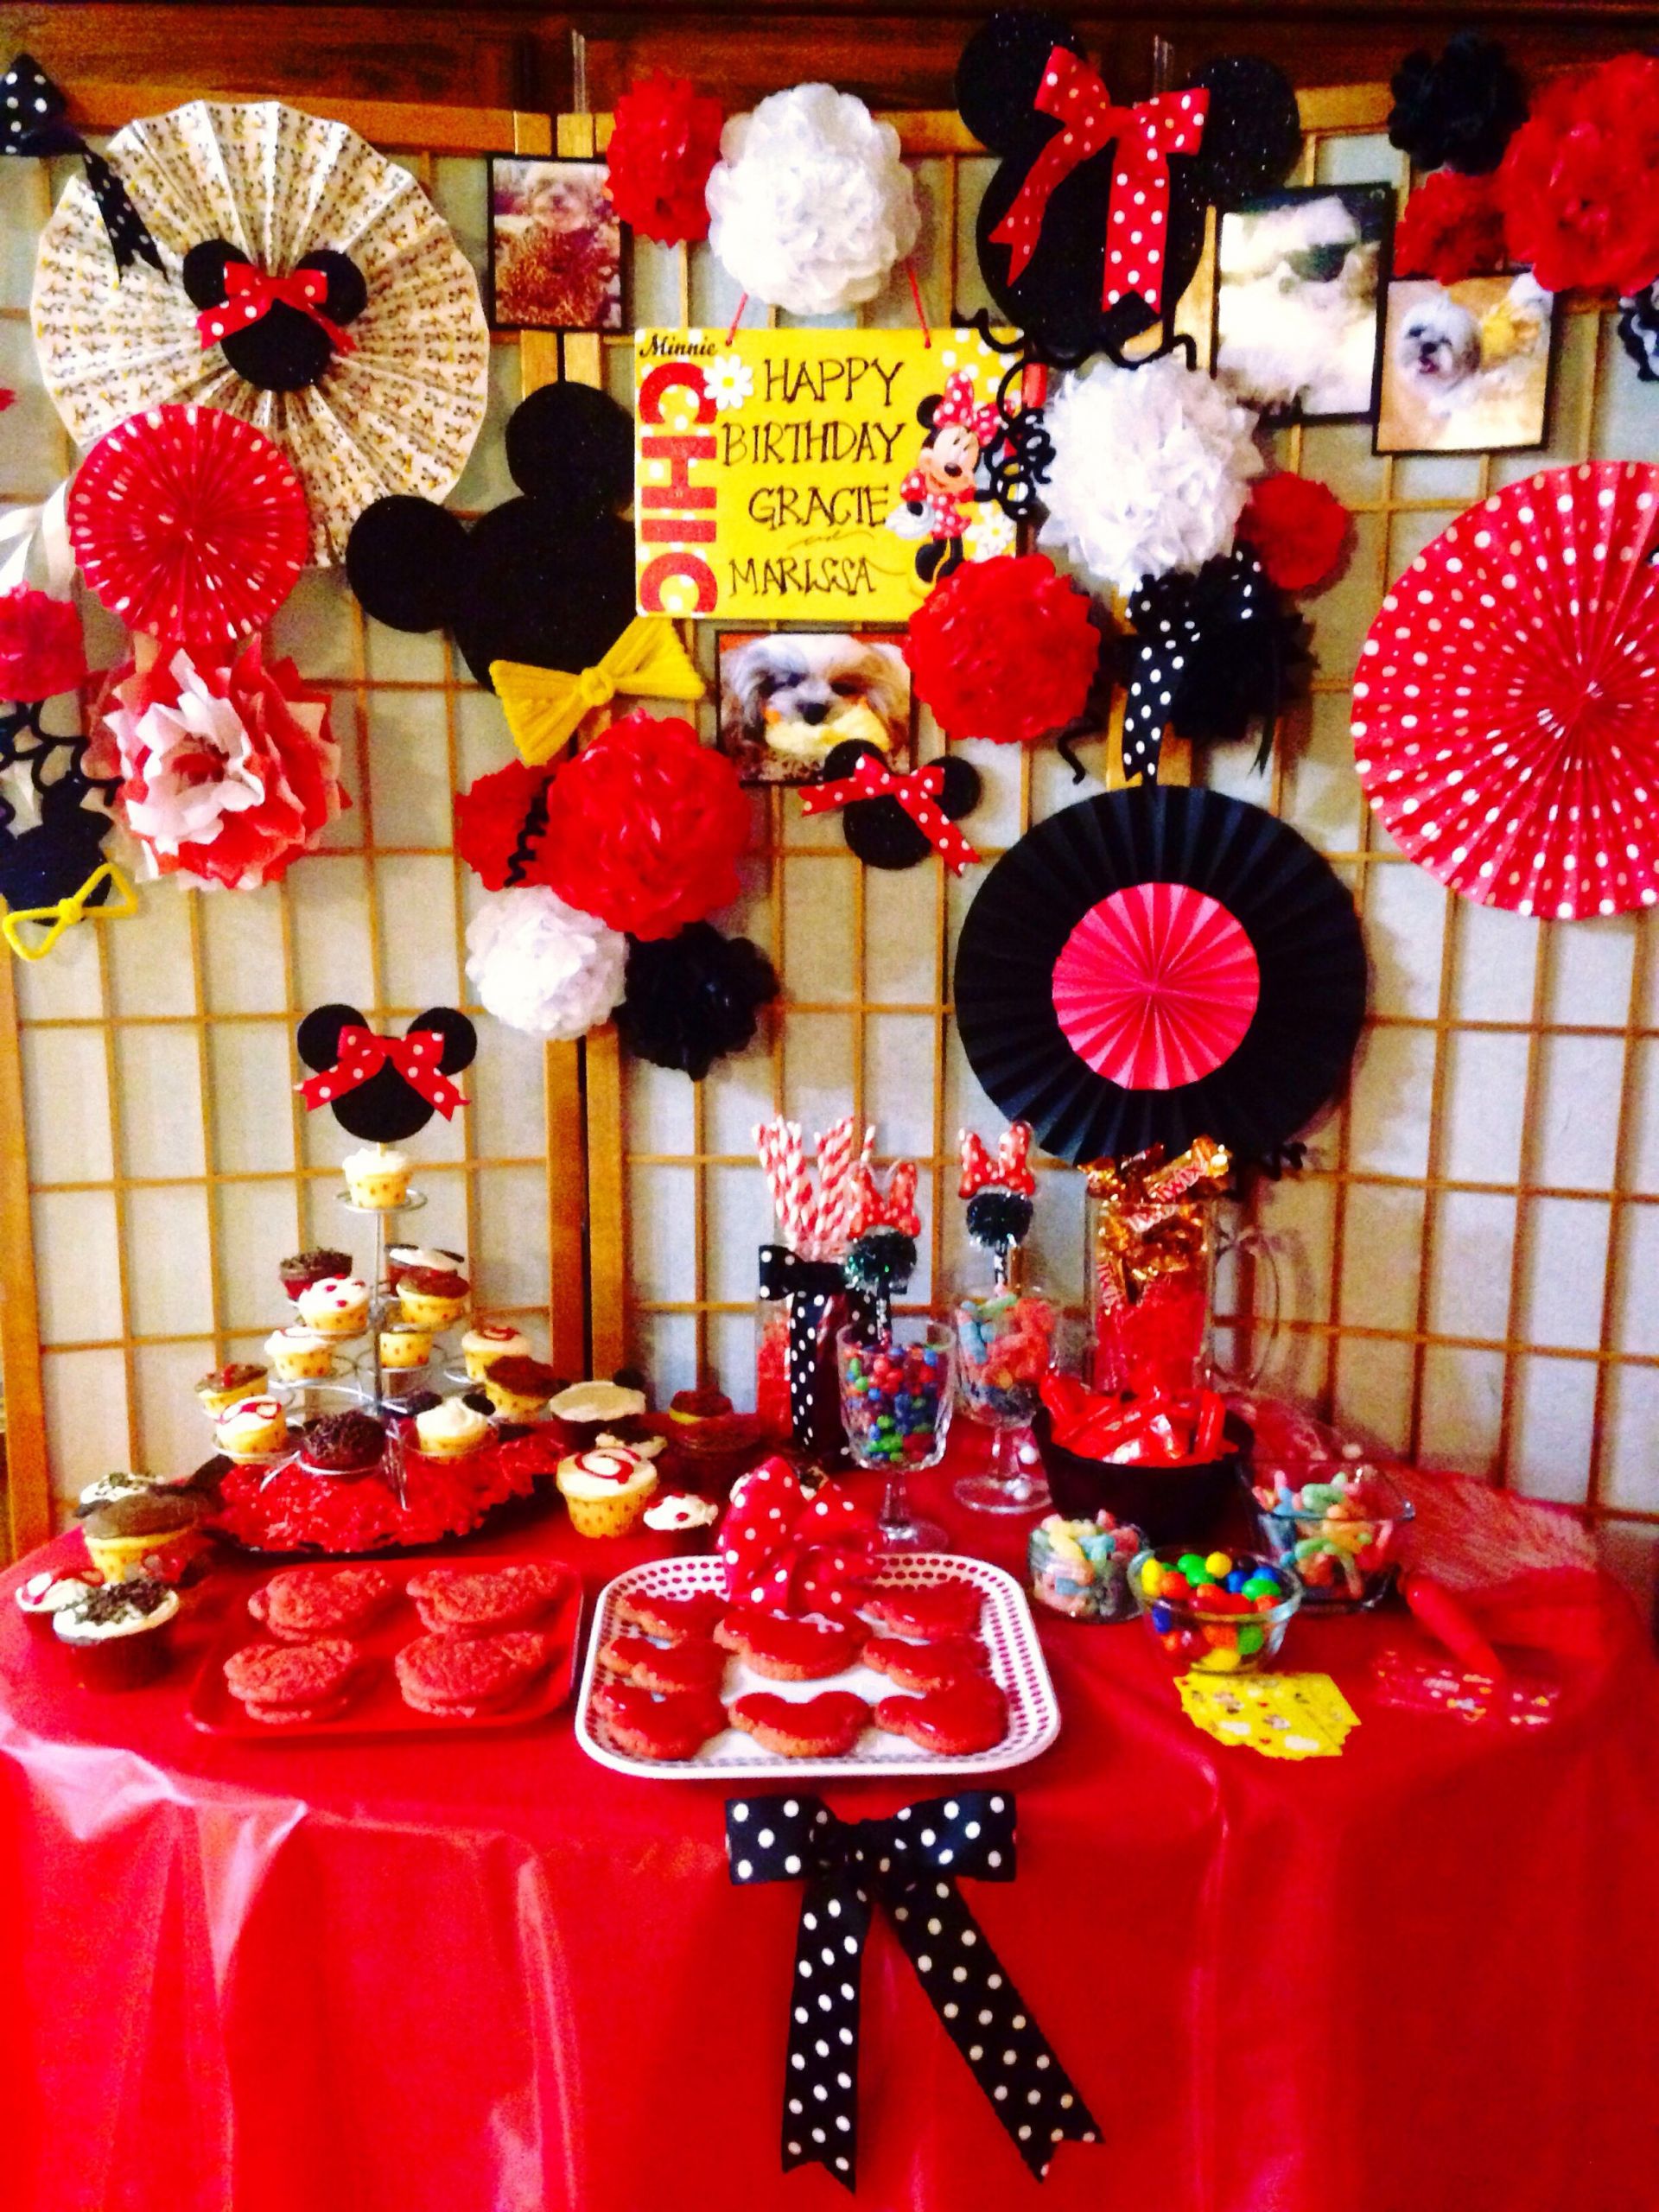 DIY Minnie Mouse Party Decorations
 DIY Minnie Mouse party decorations